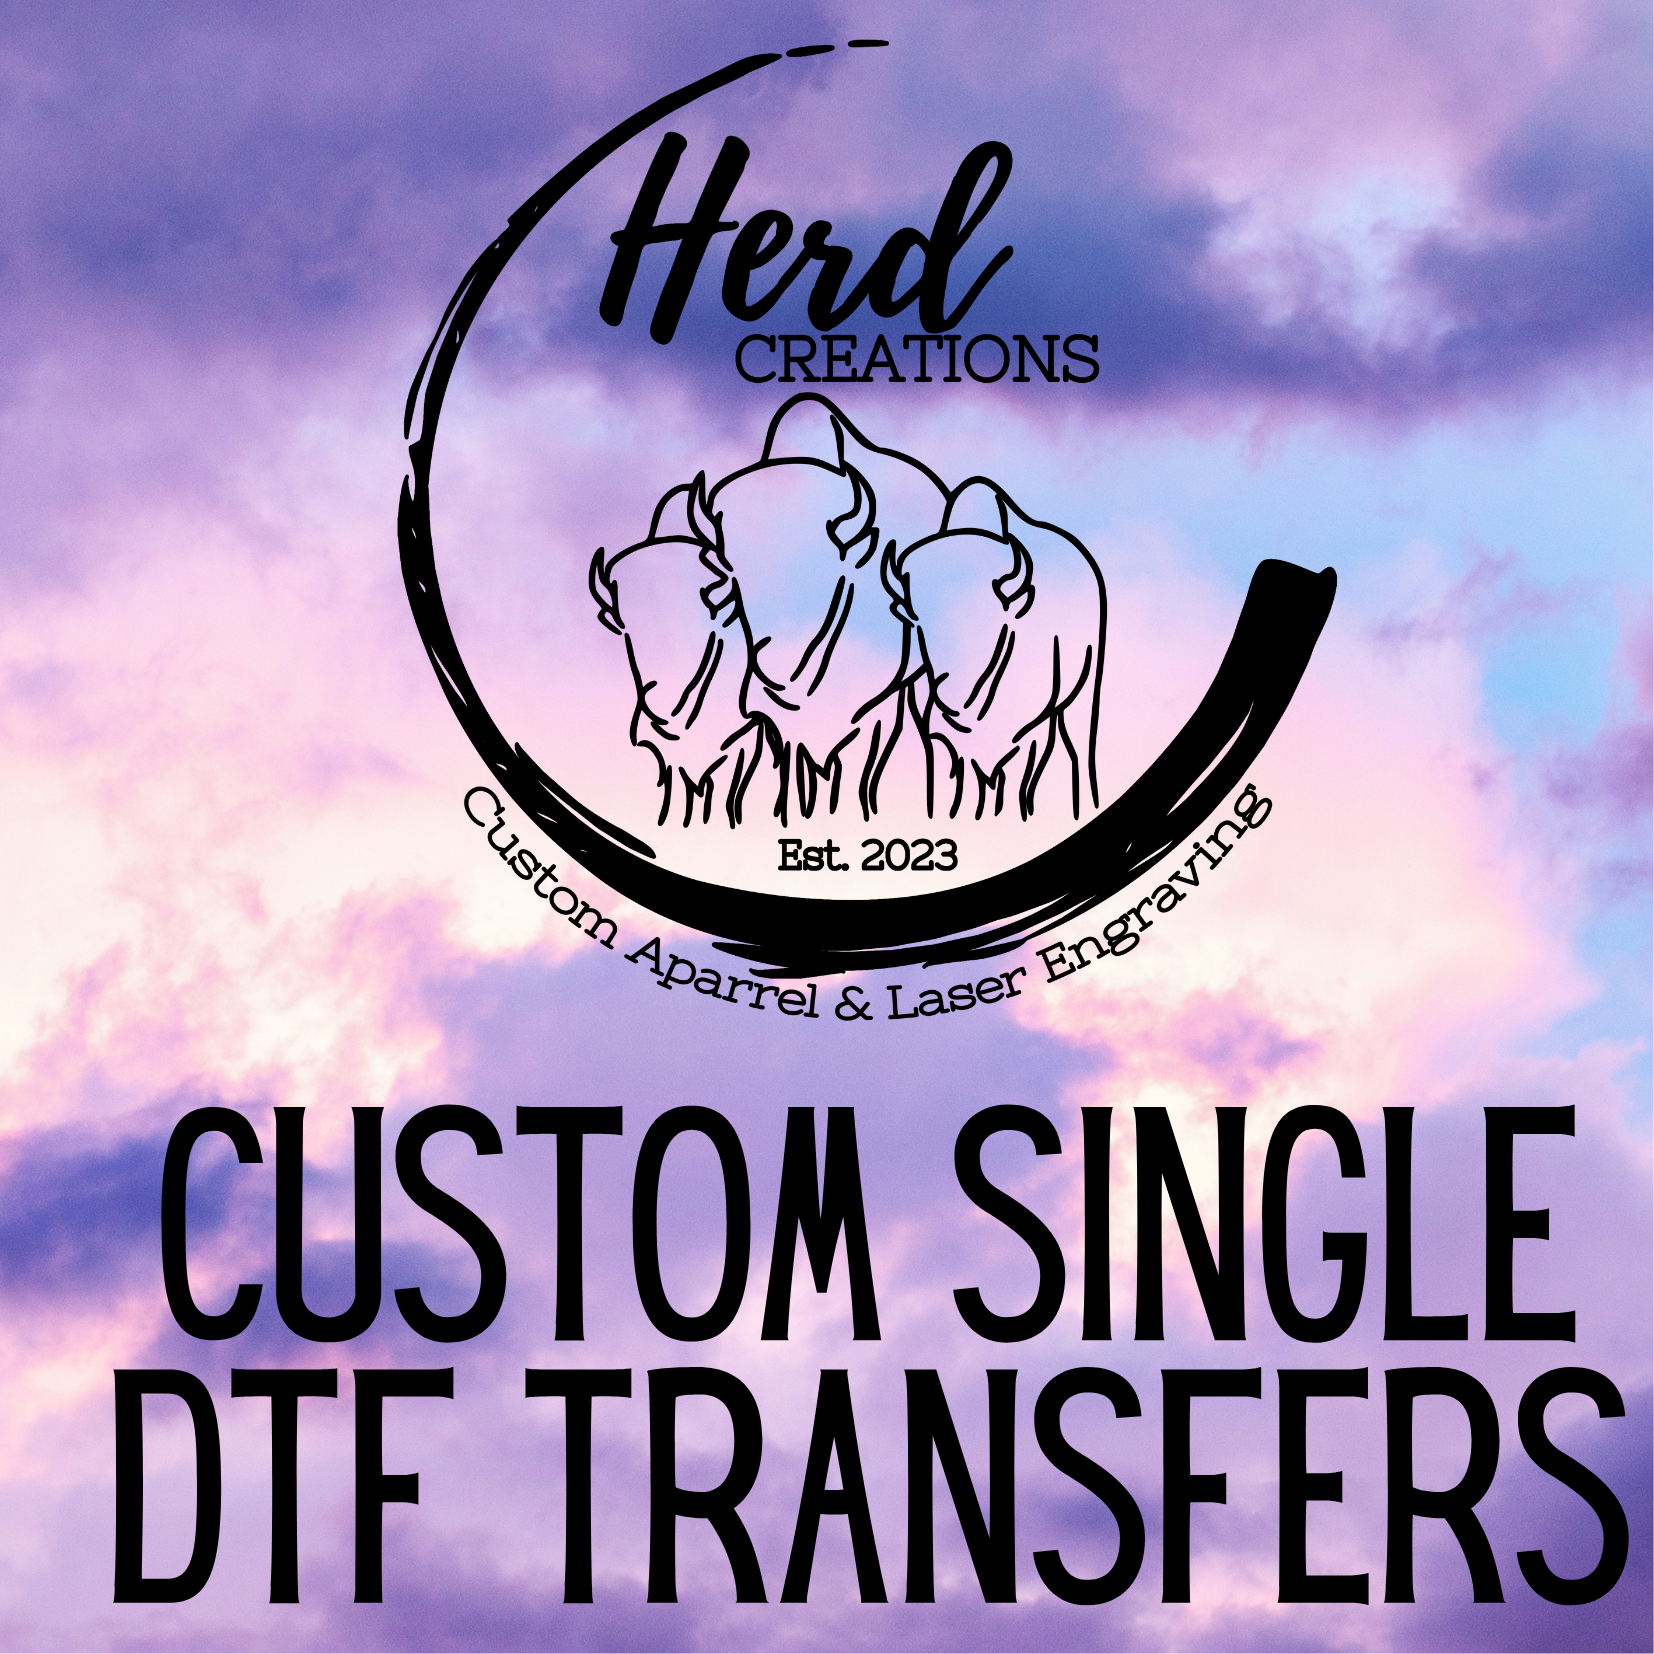 Custom DTF Transfers-Ready to Press